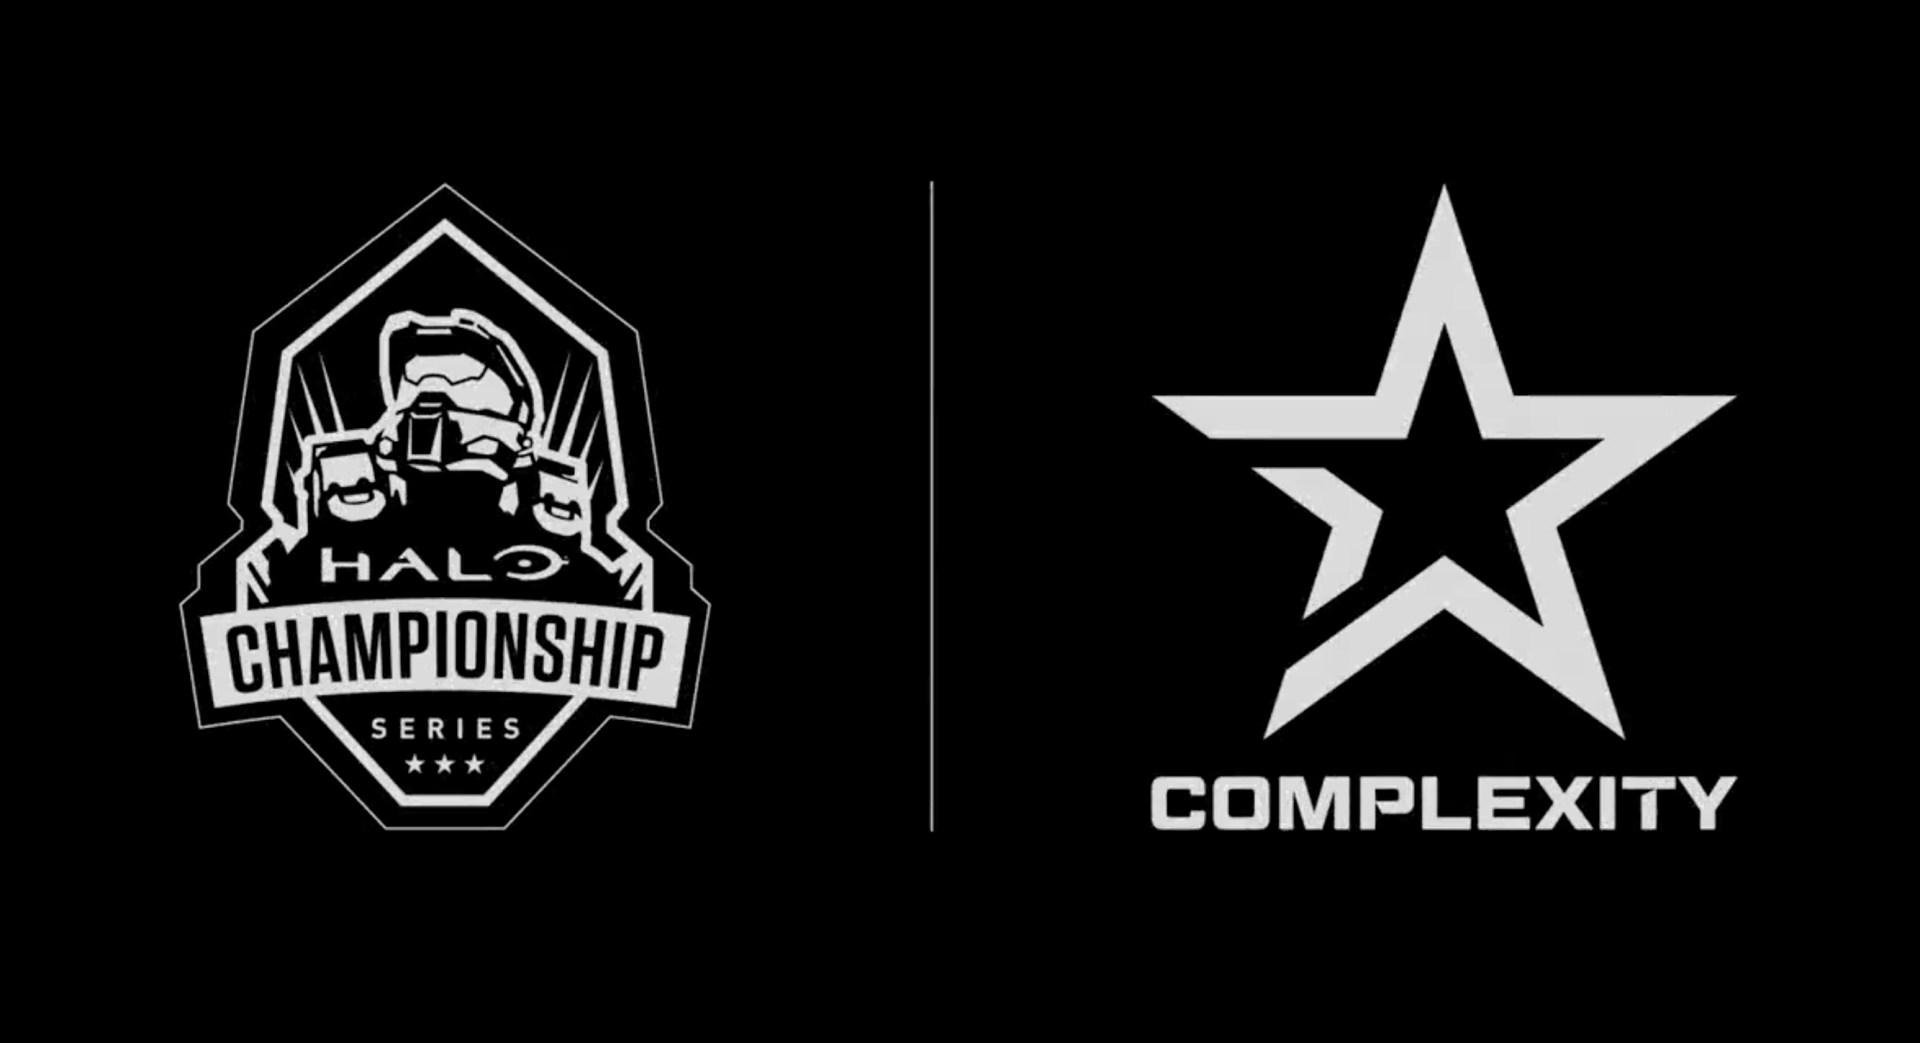 Complexity latest Halo Championship Series partner team